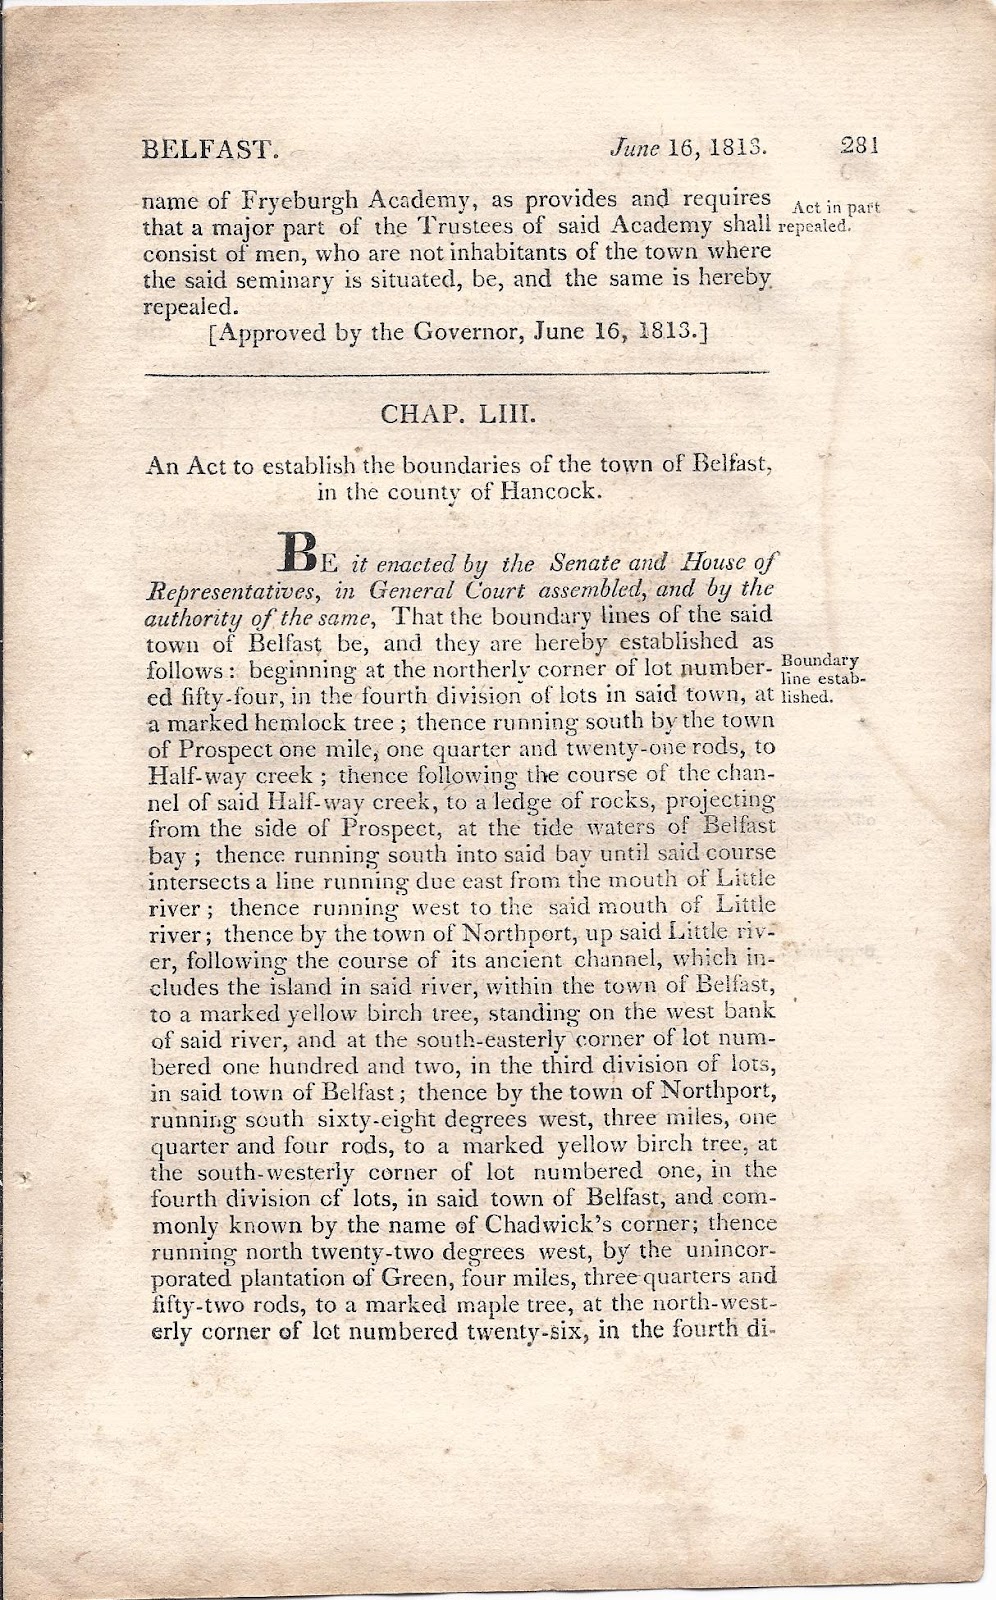 Heirlooms Reunited: 1813 Law Establishing Boundaries of Belfast, Maine